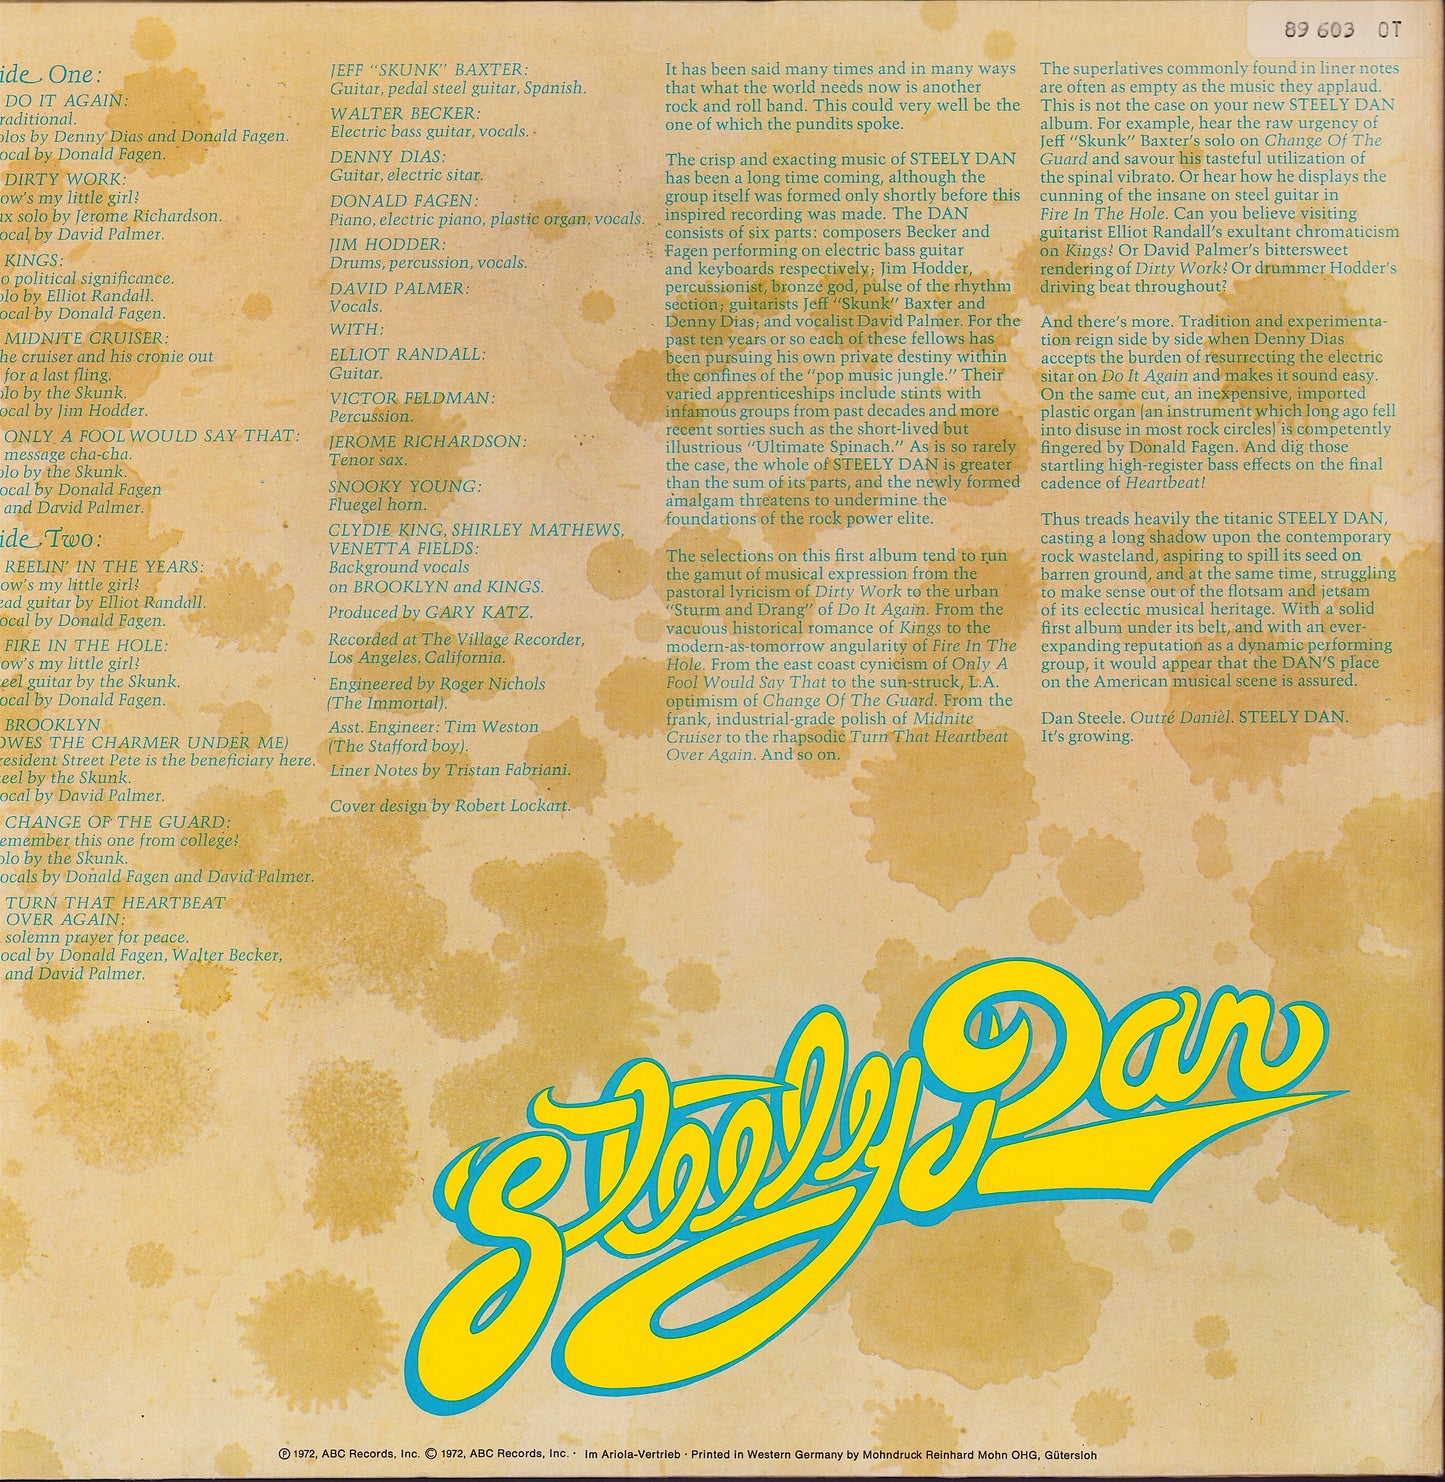 Steely Dan ‎- Can't Buy A Thrill Vinyl LP